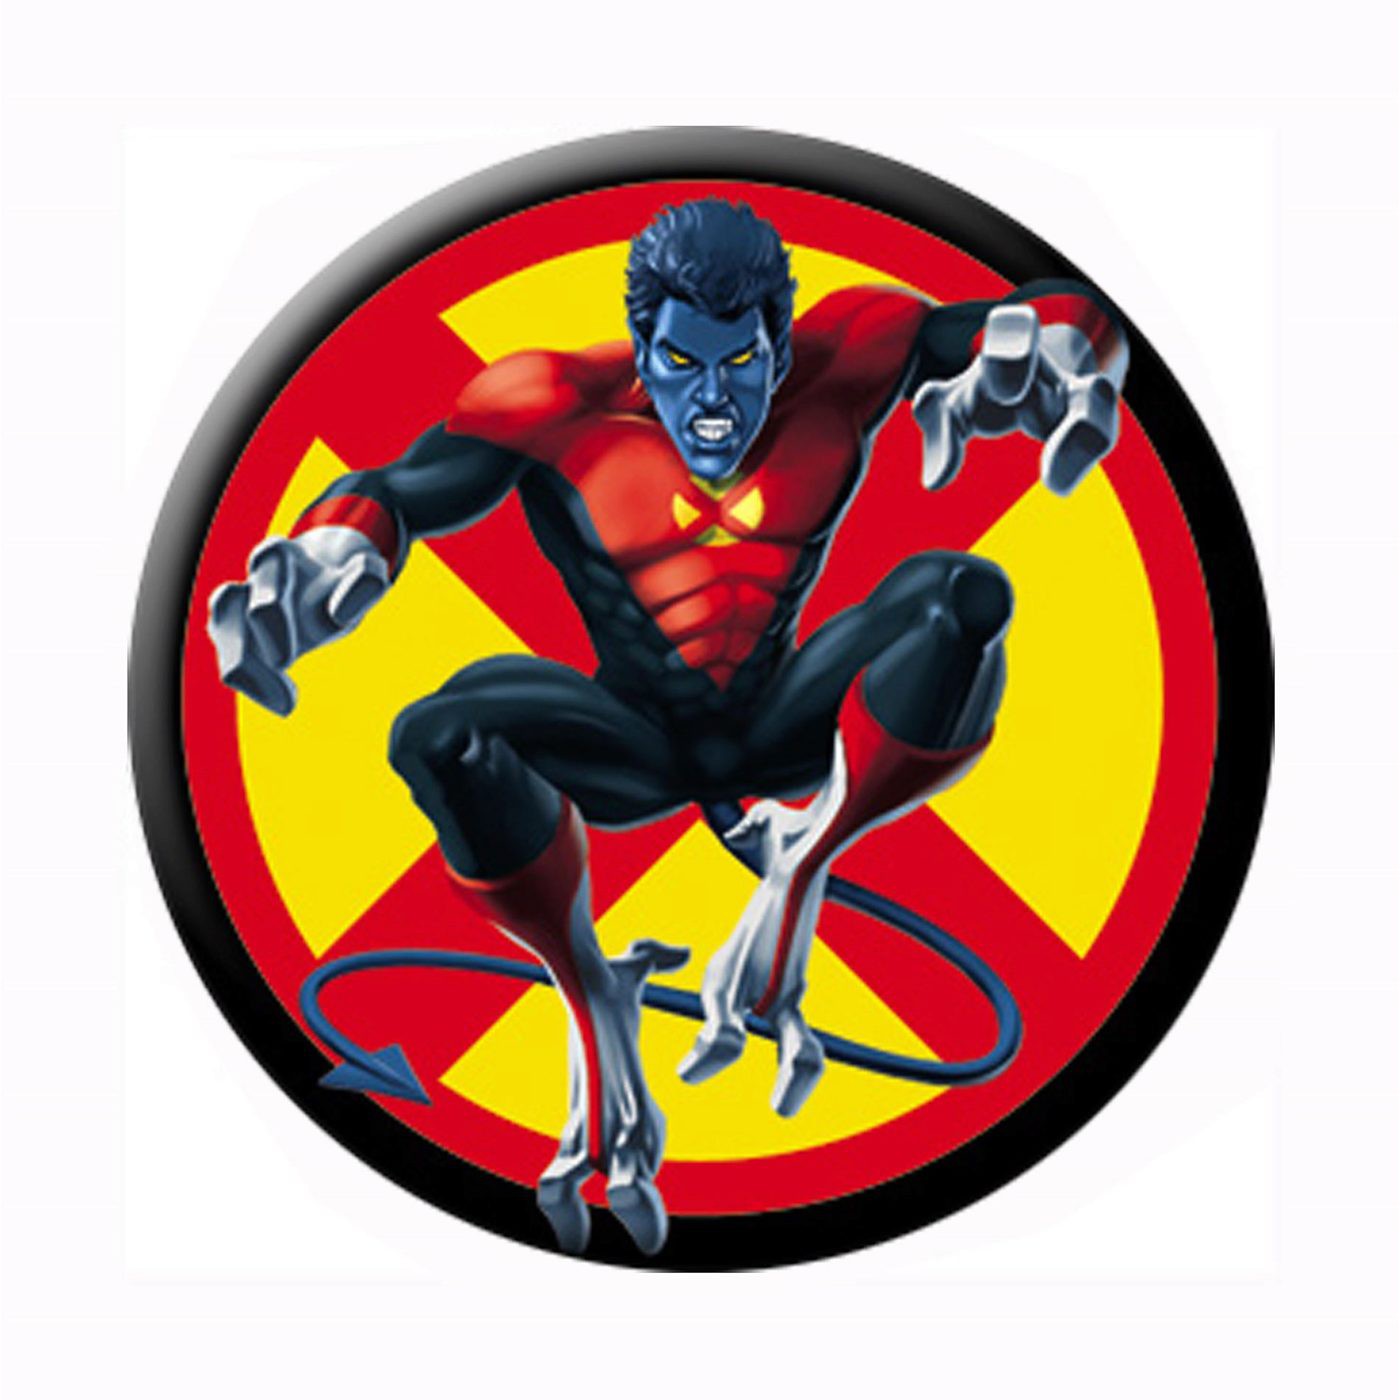 X-Men Nightcrawler Button